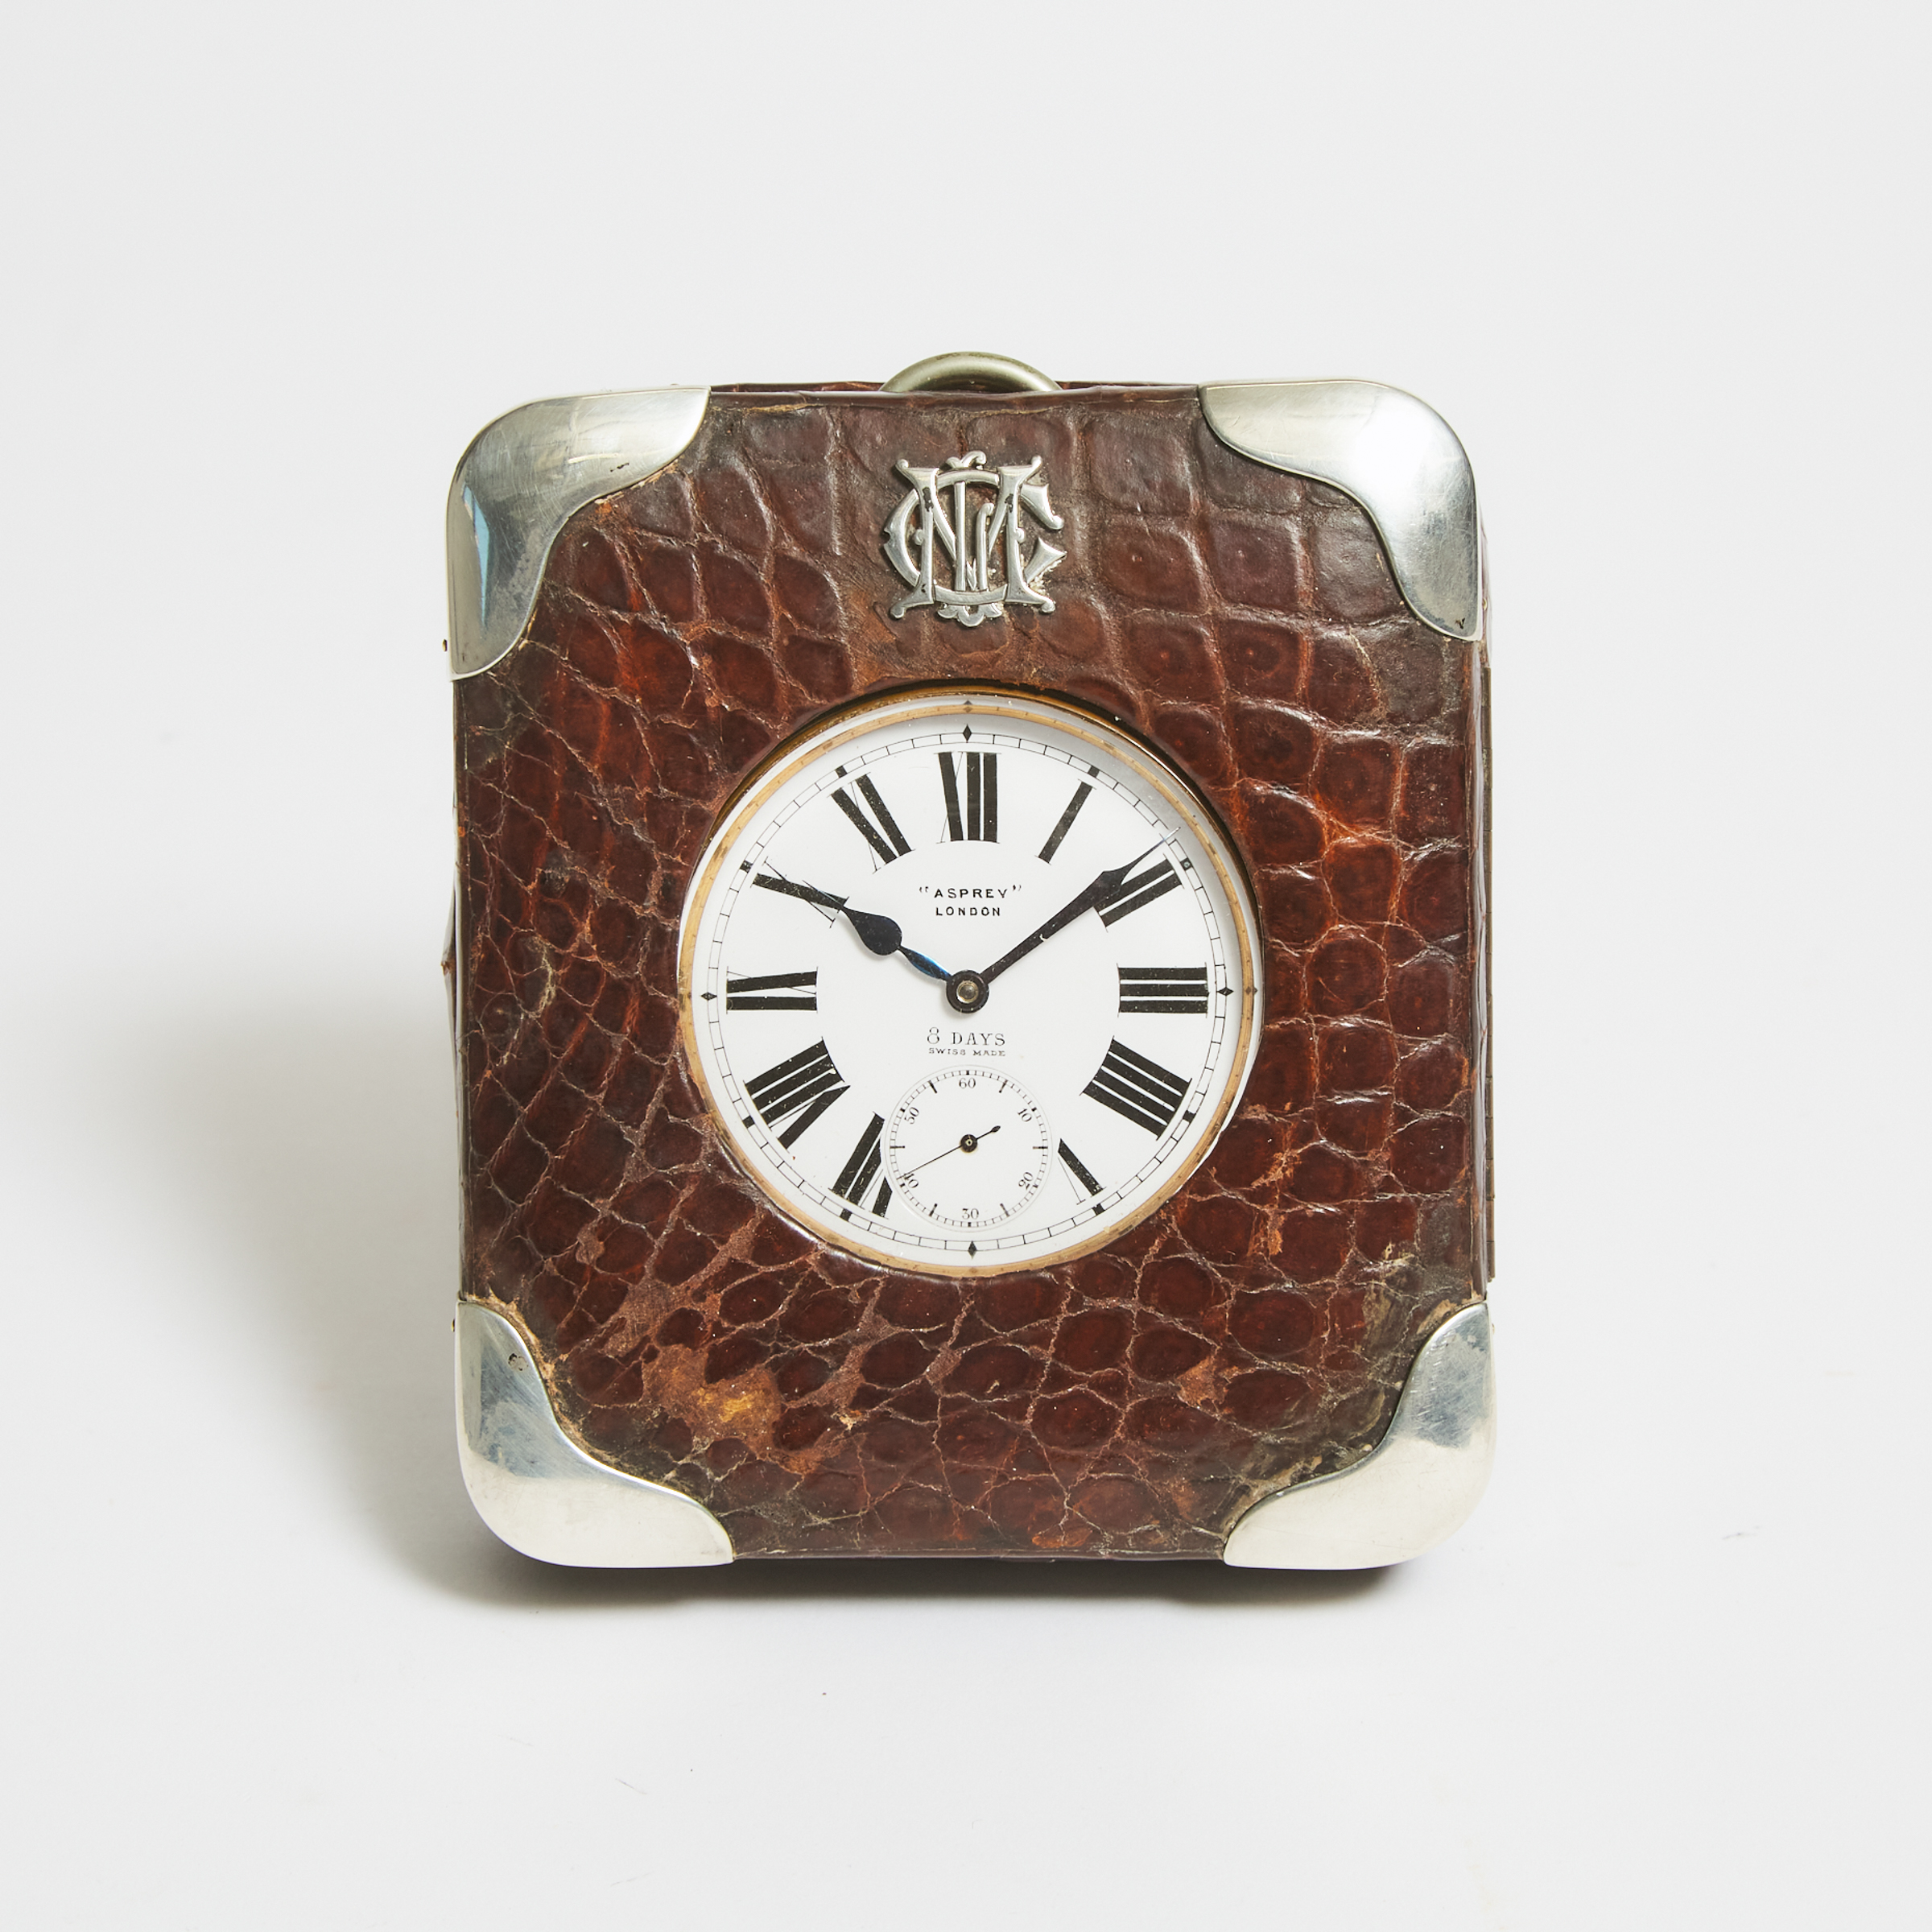 Asprey Silver Mounted Crocodile Cased Travel Clock, London, 1902